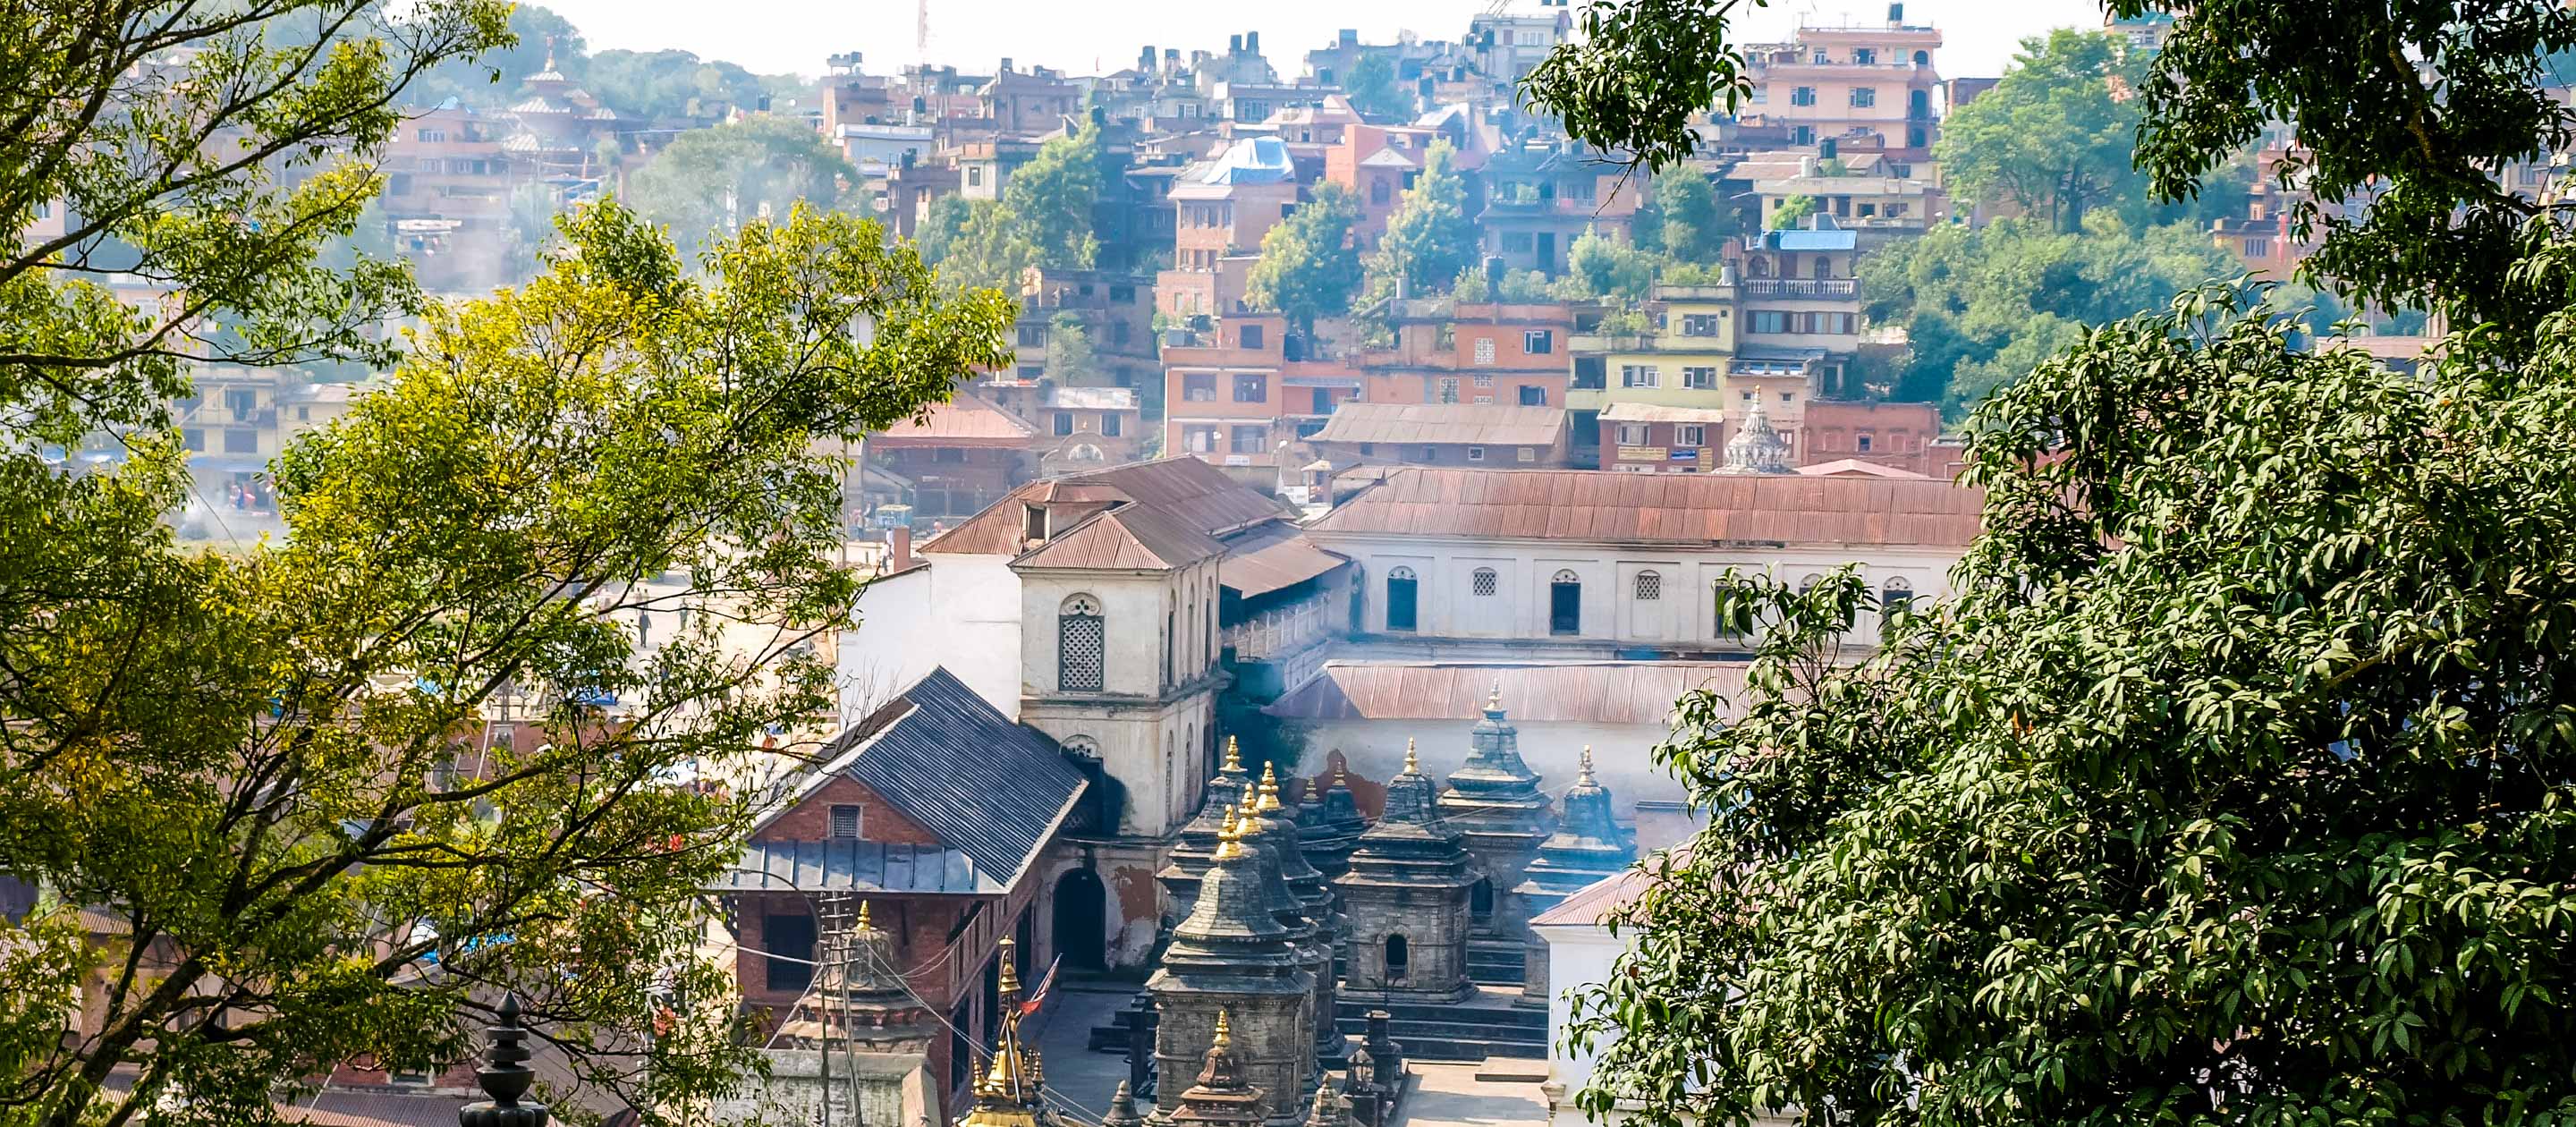 View over rooftops of Kathmandu, Nepal